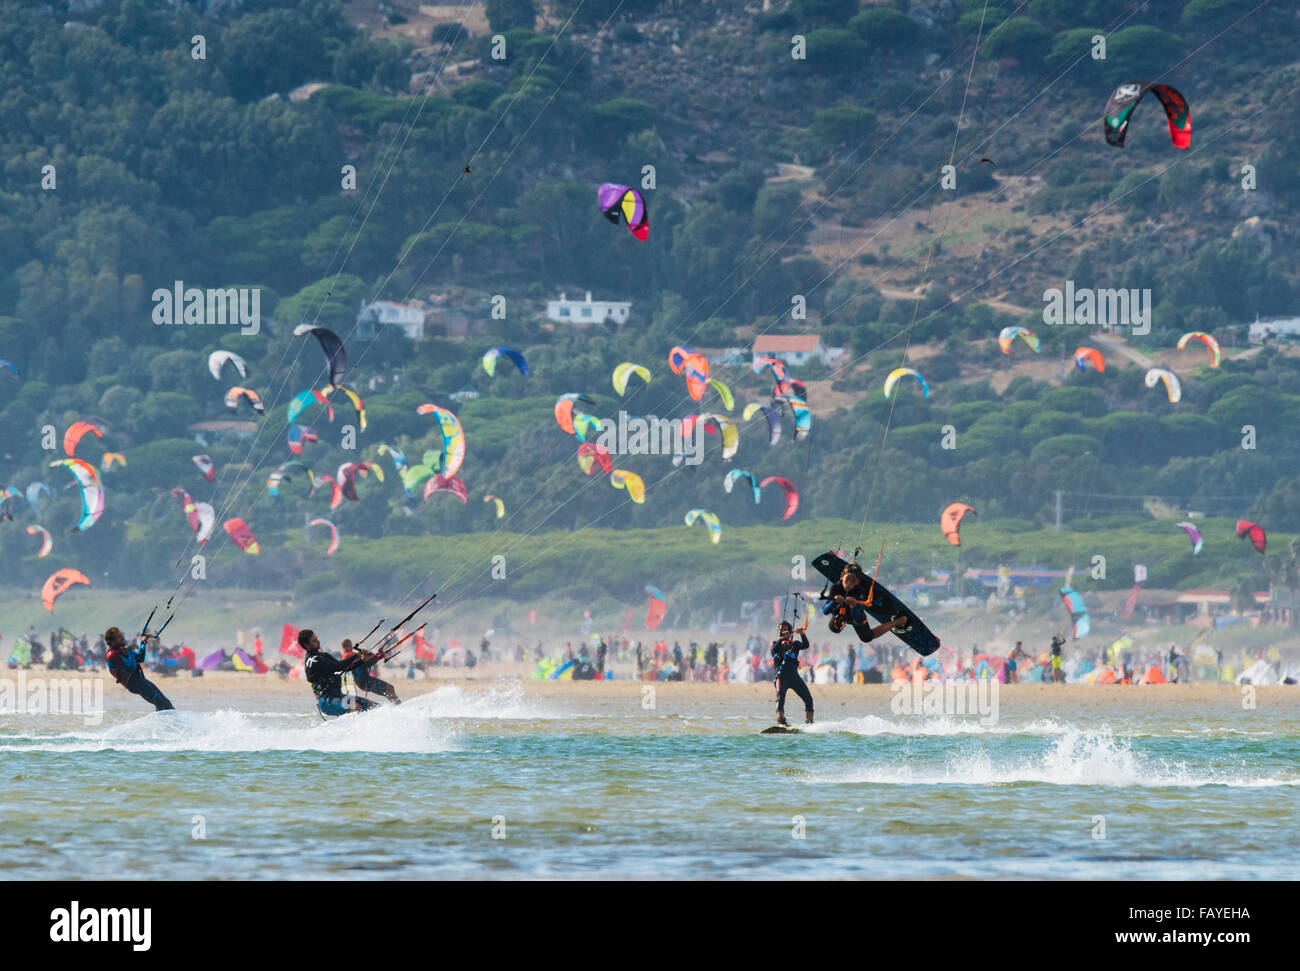 Kitesurfing. Los Lances beach, Tarifa, Costa de la Luz, Andalusia, Southern Spain. Stock Photo